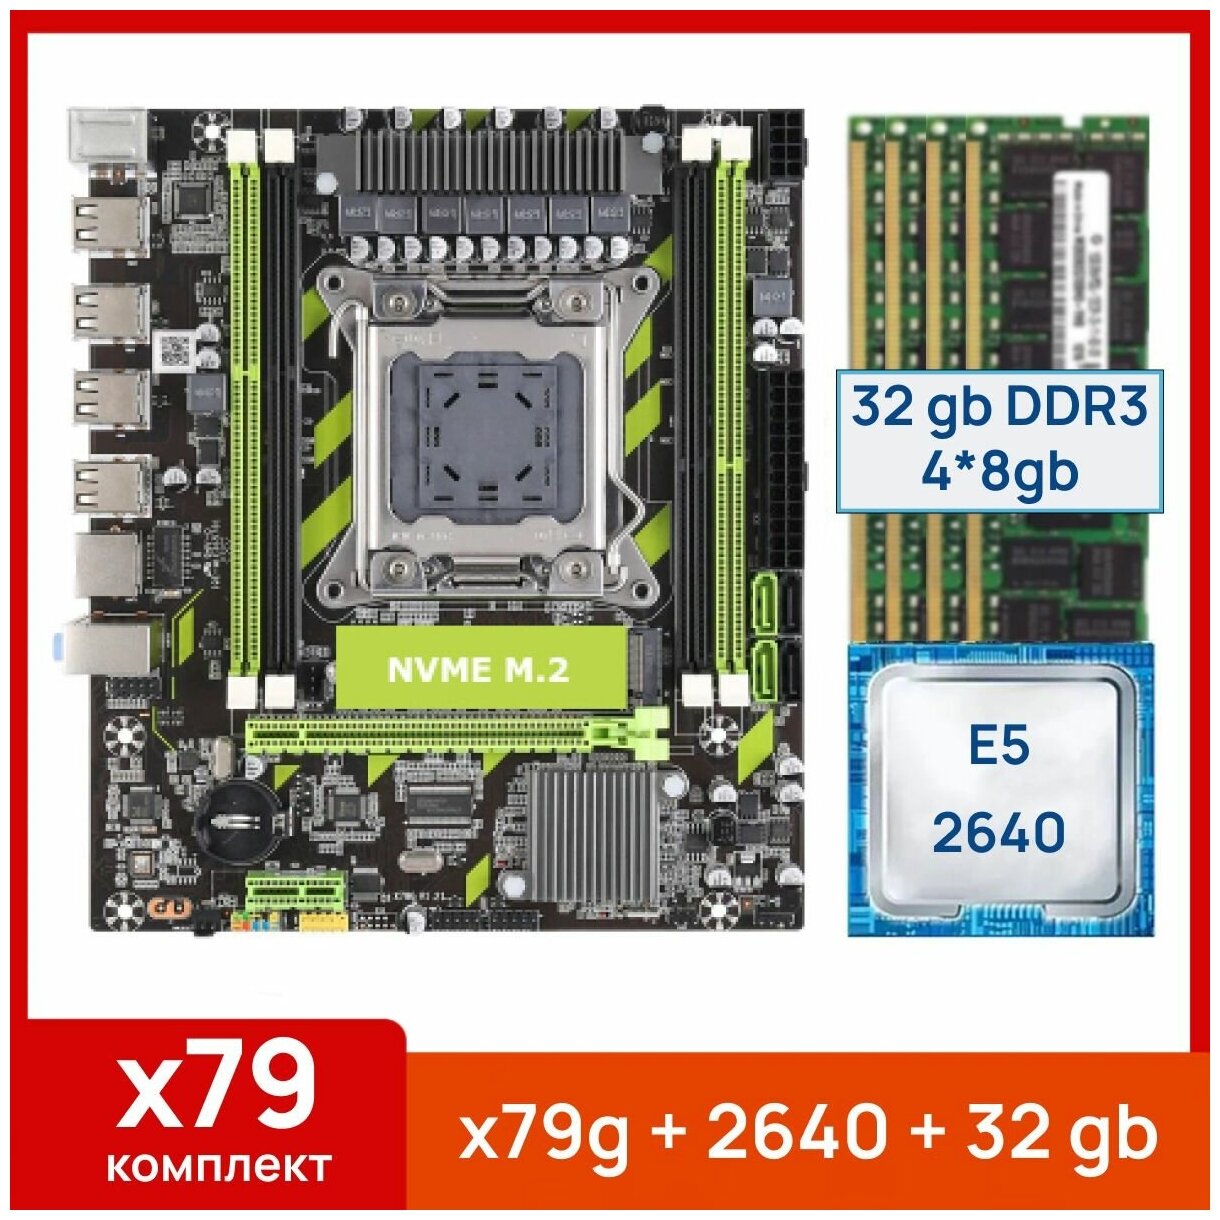 Комплект: Atermiter x79g + Xeon E5 2640 + 32 gb(4x8gb) DDR3 ecc reg